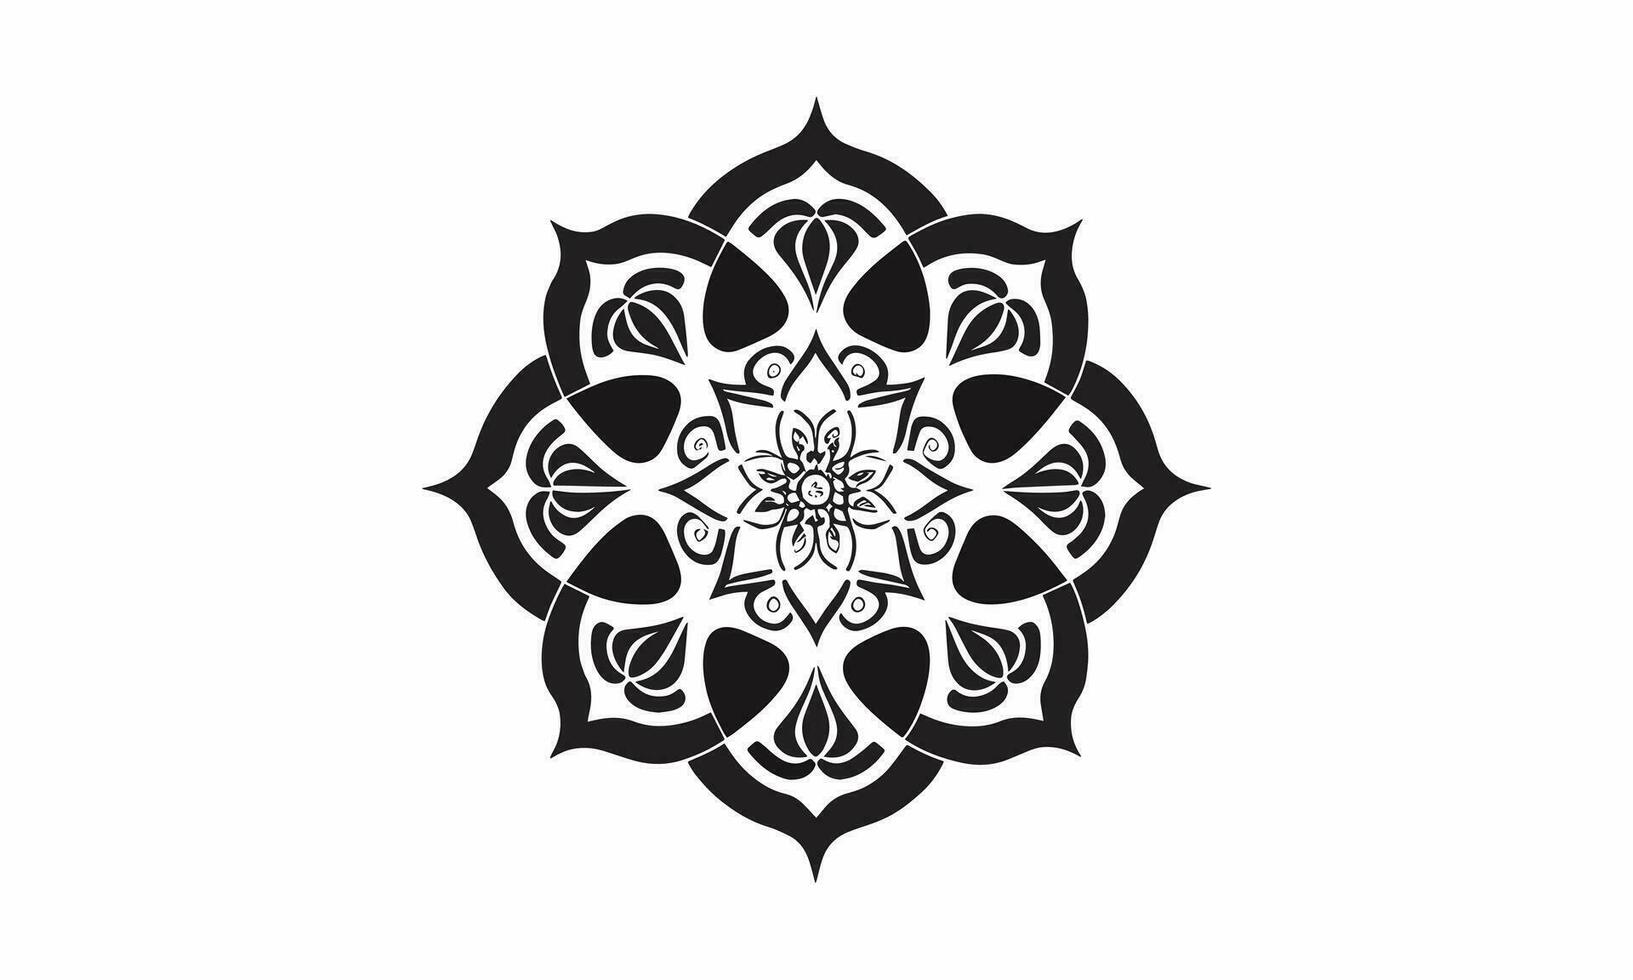 Mandala on white isolated background design with vector